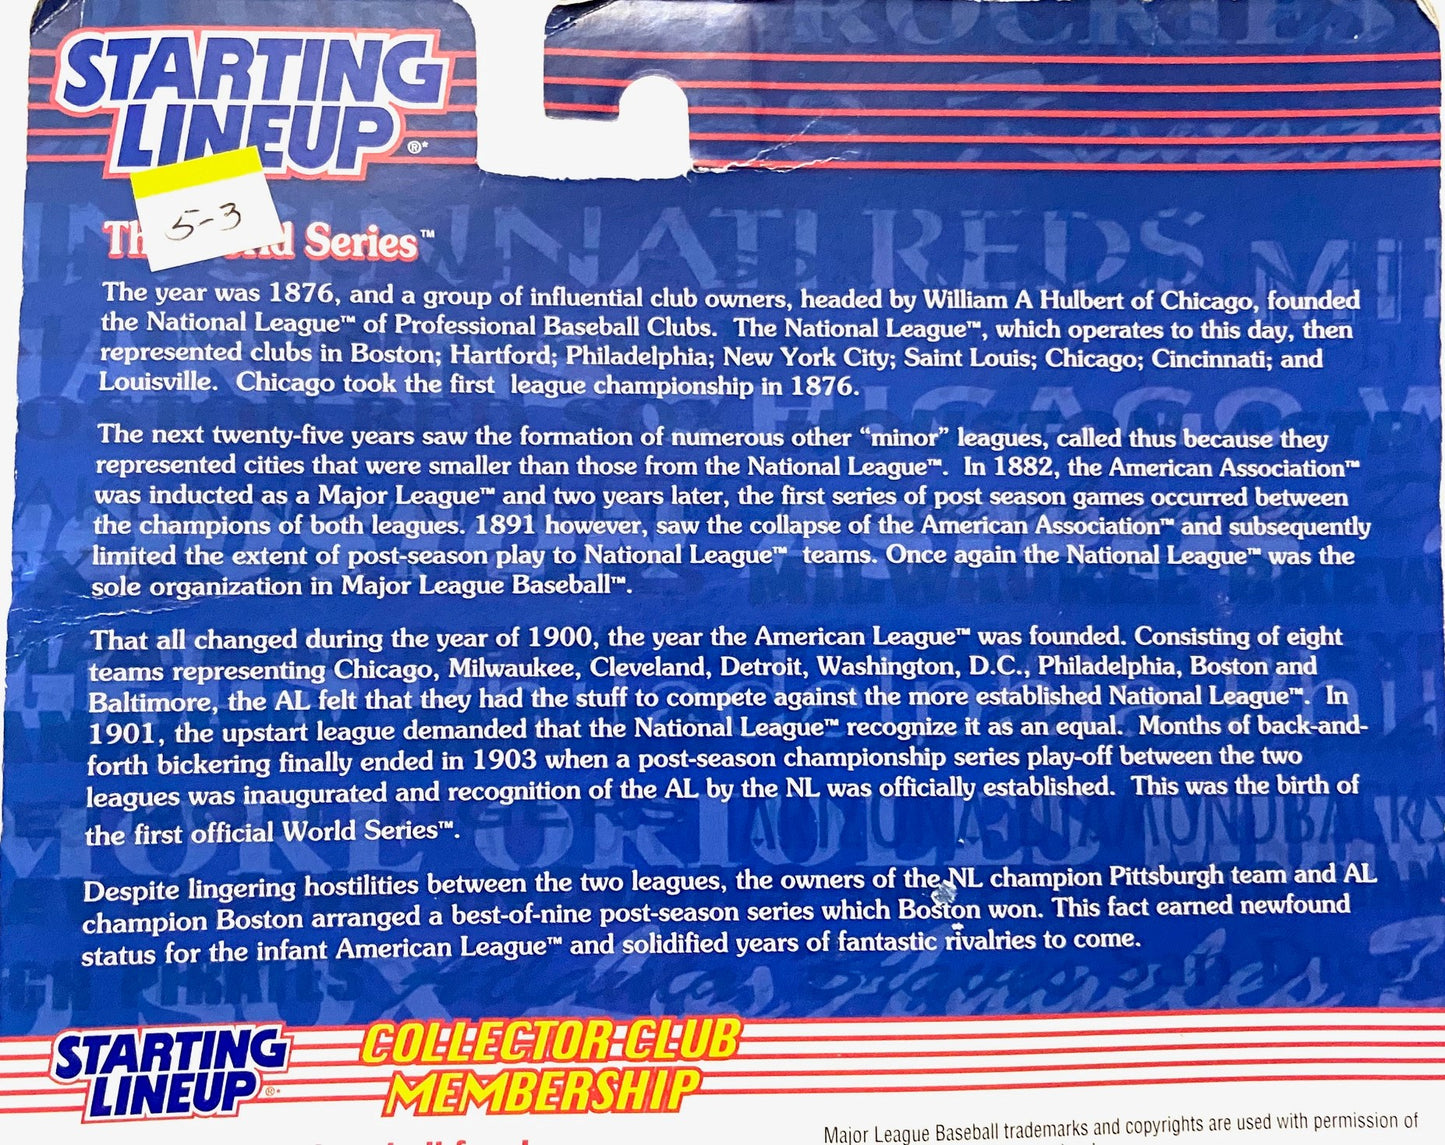 J.D. Drew 1999 MLB St. Louis Cardinals Starting Lineup Figurine (New) by Hasbro